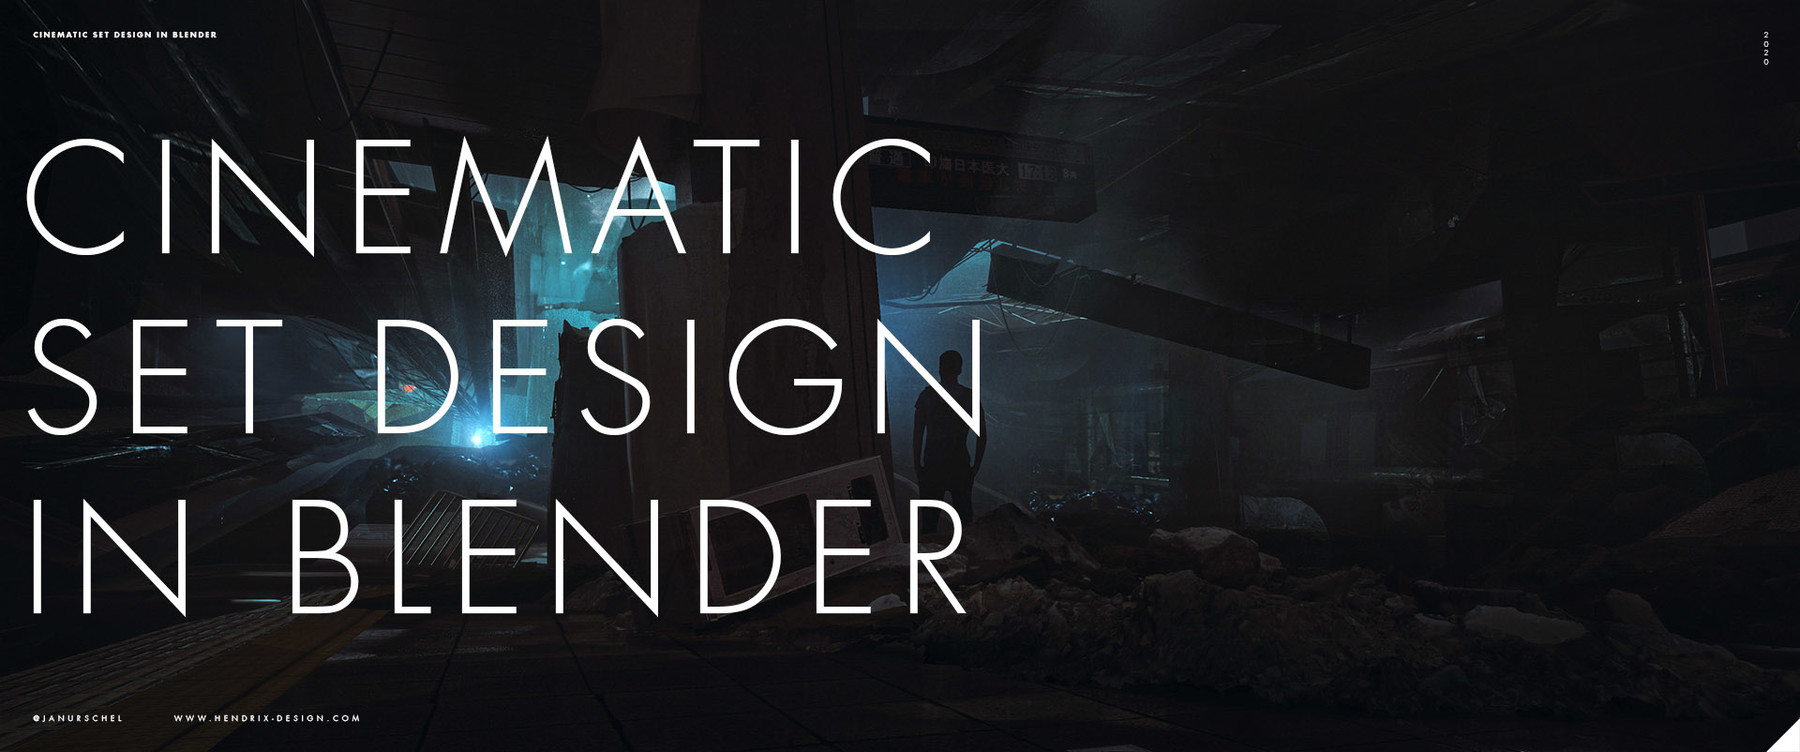 ArtStation - Cinematic Set Design in Blender | Tutorials